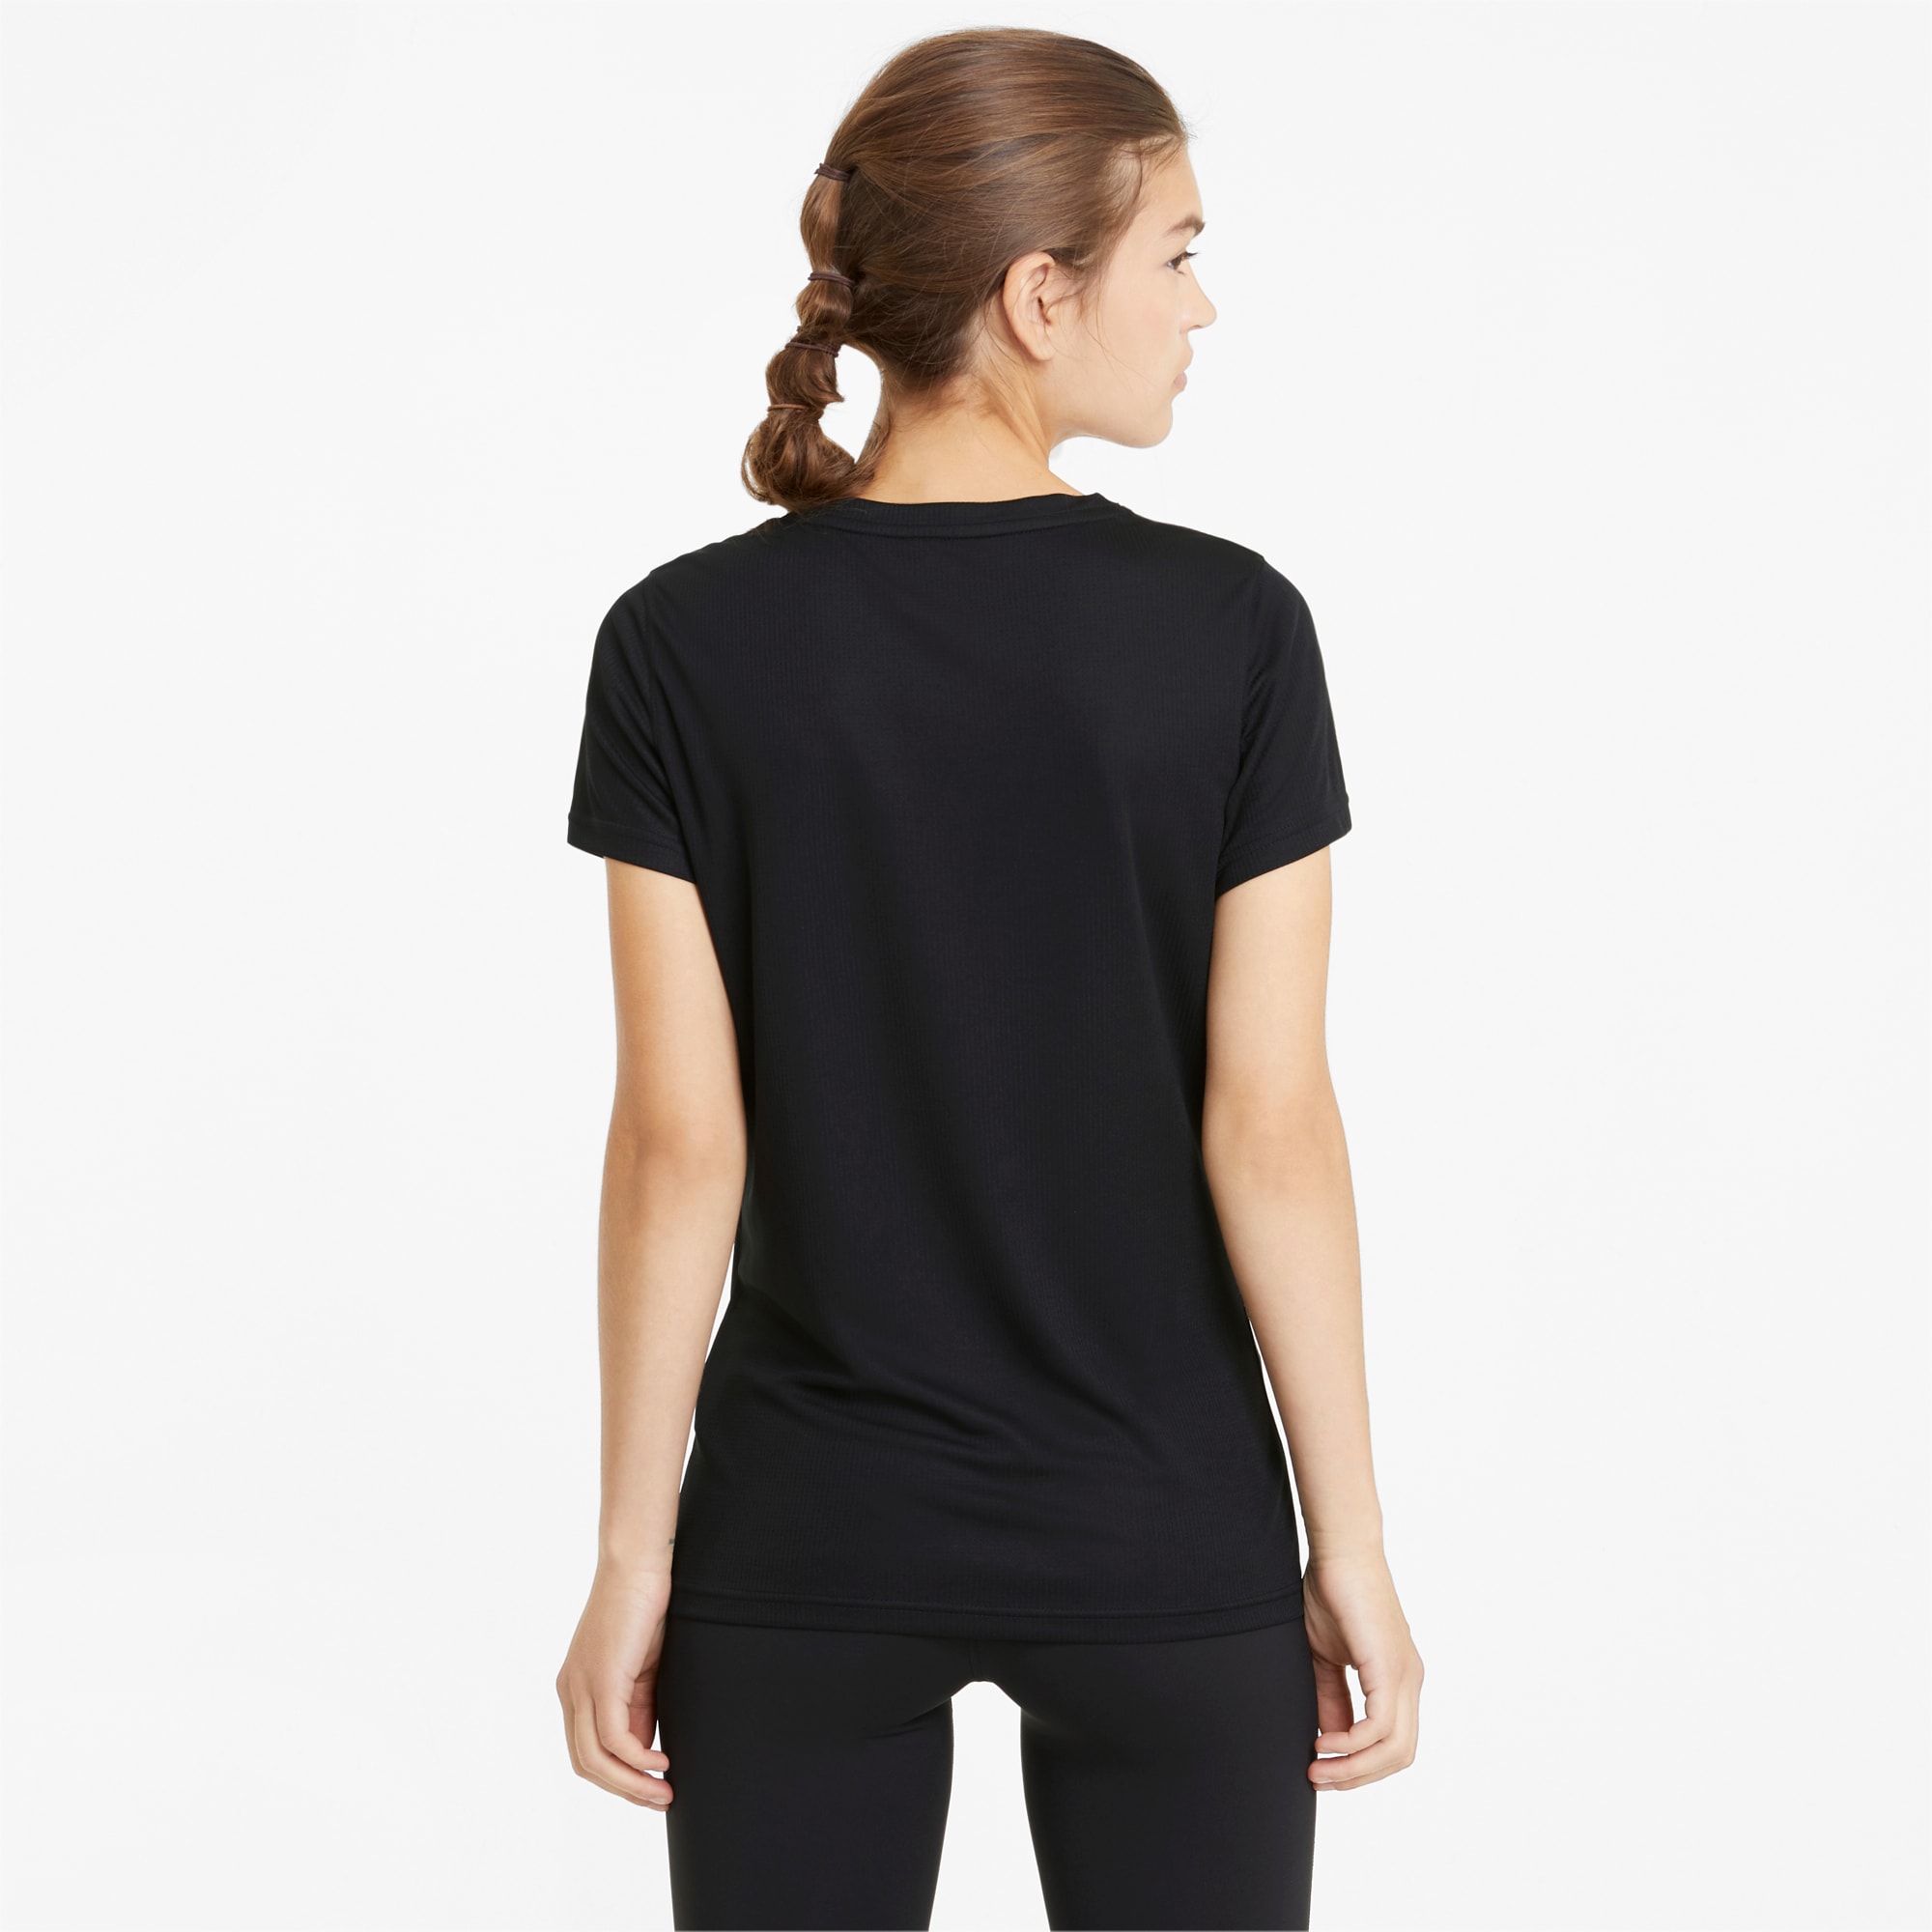 PUMA Performance Women's Training T-Shirt, Black, Size XL, Clothing